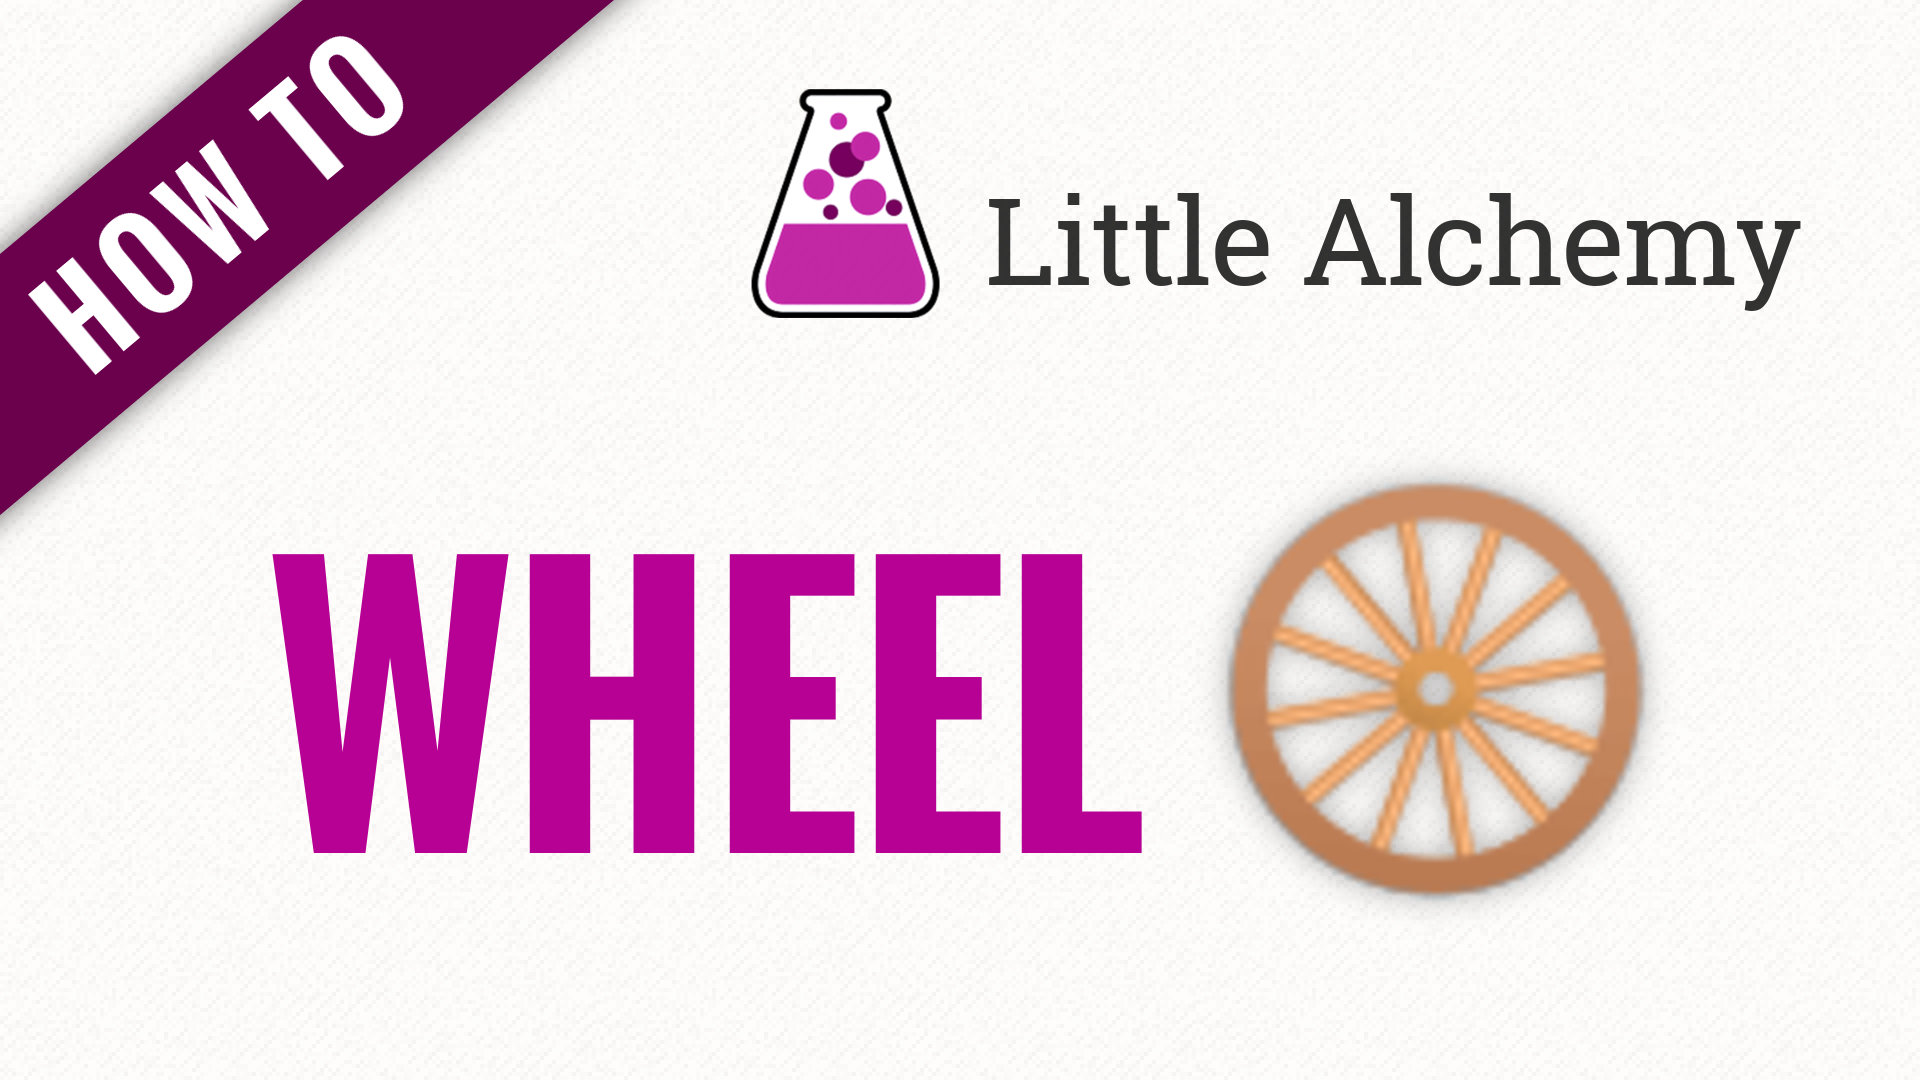 How To Make Wheel In Little Alchemy